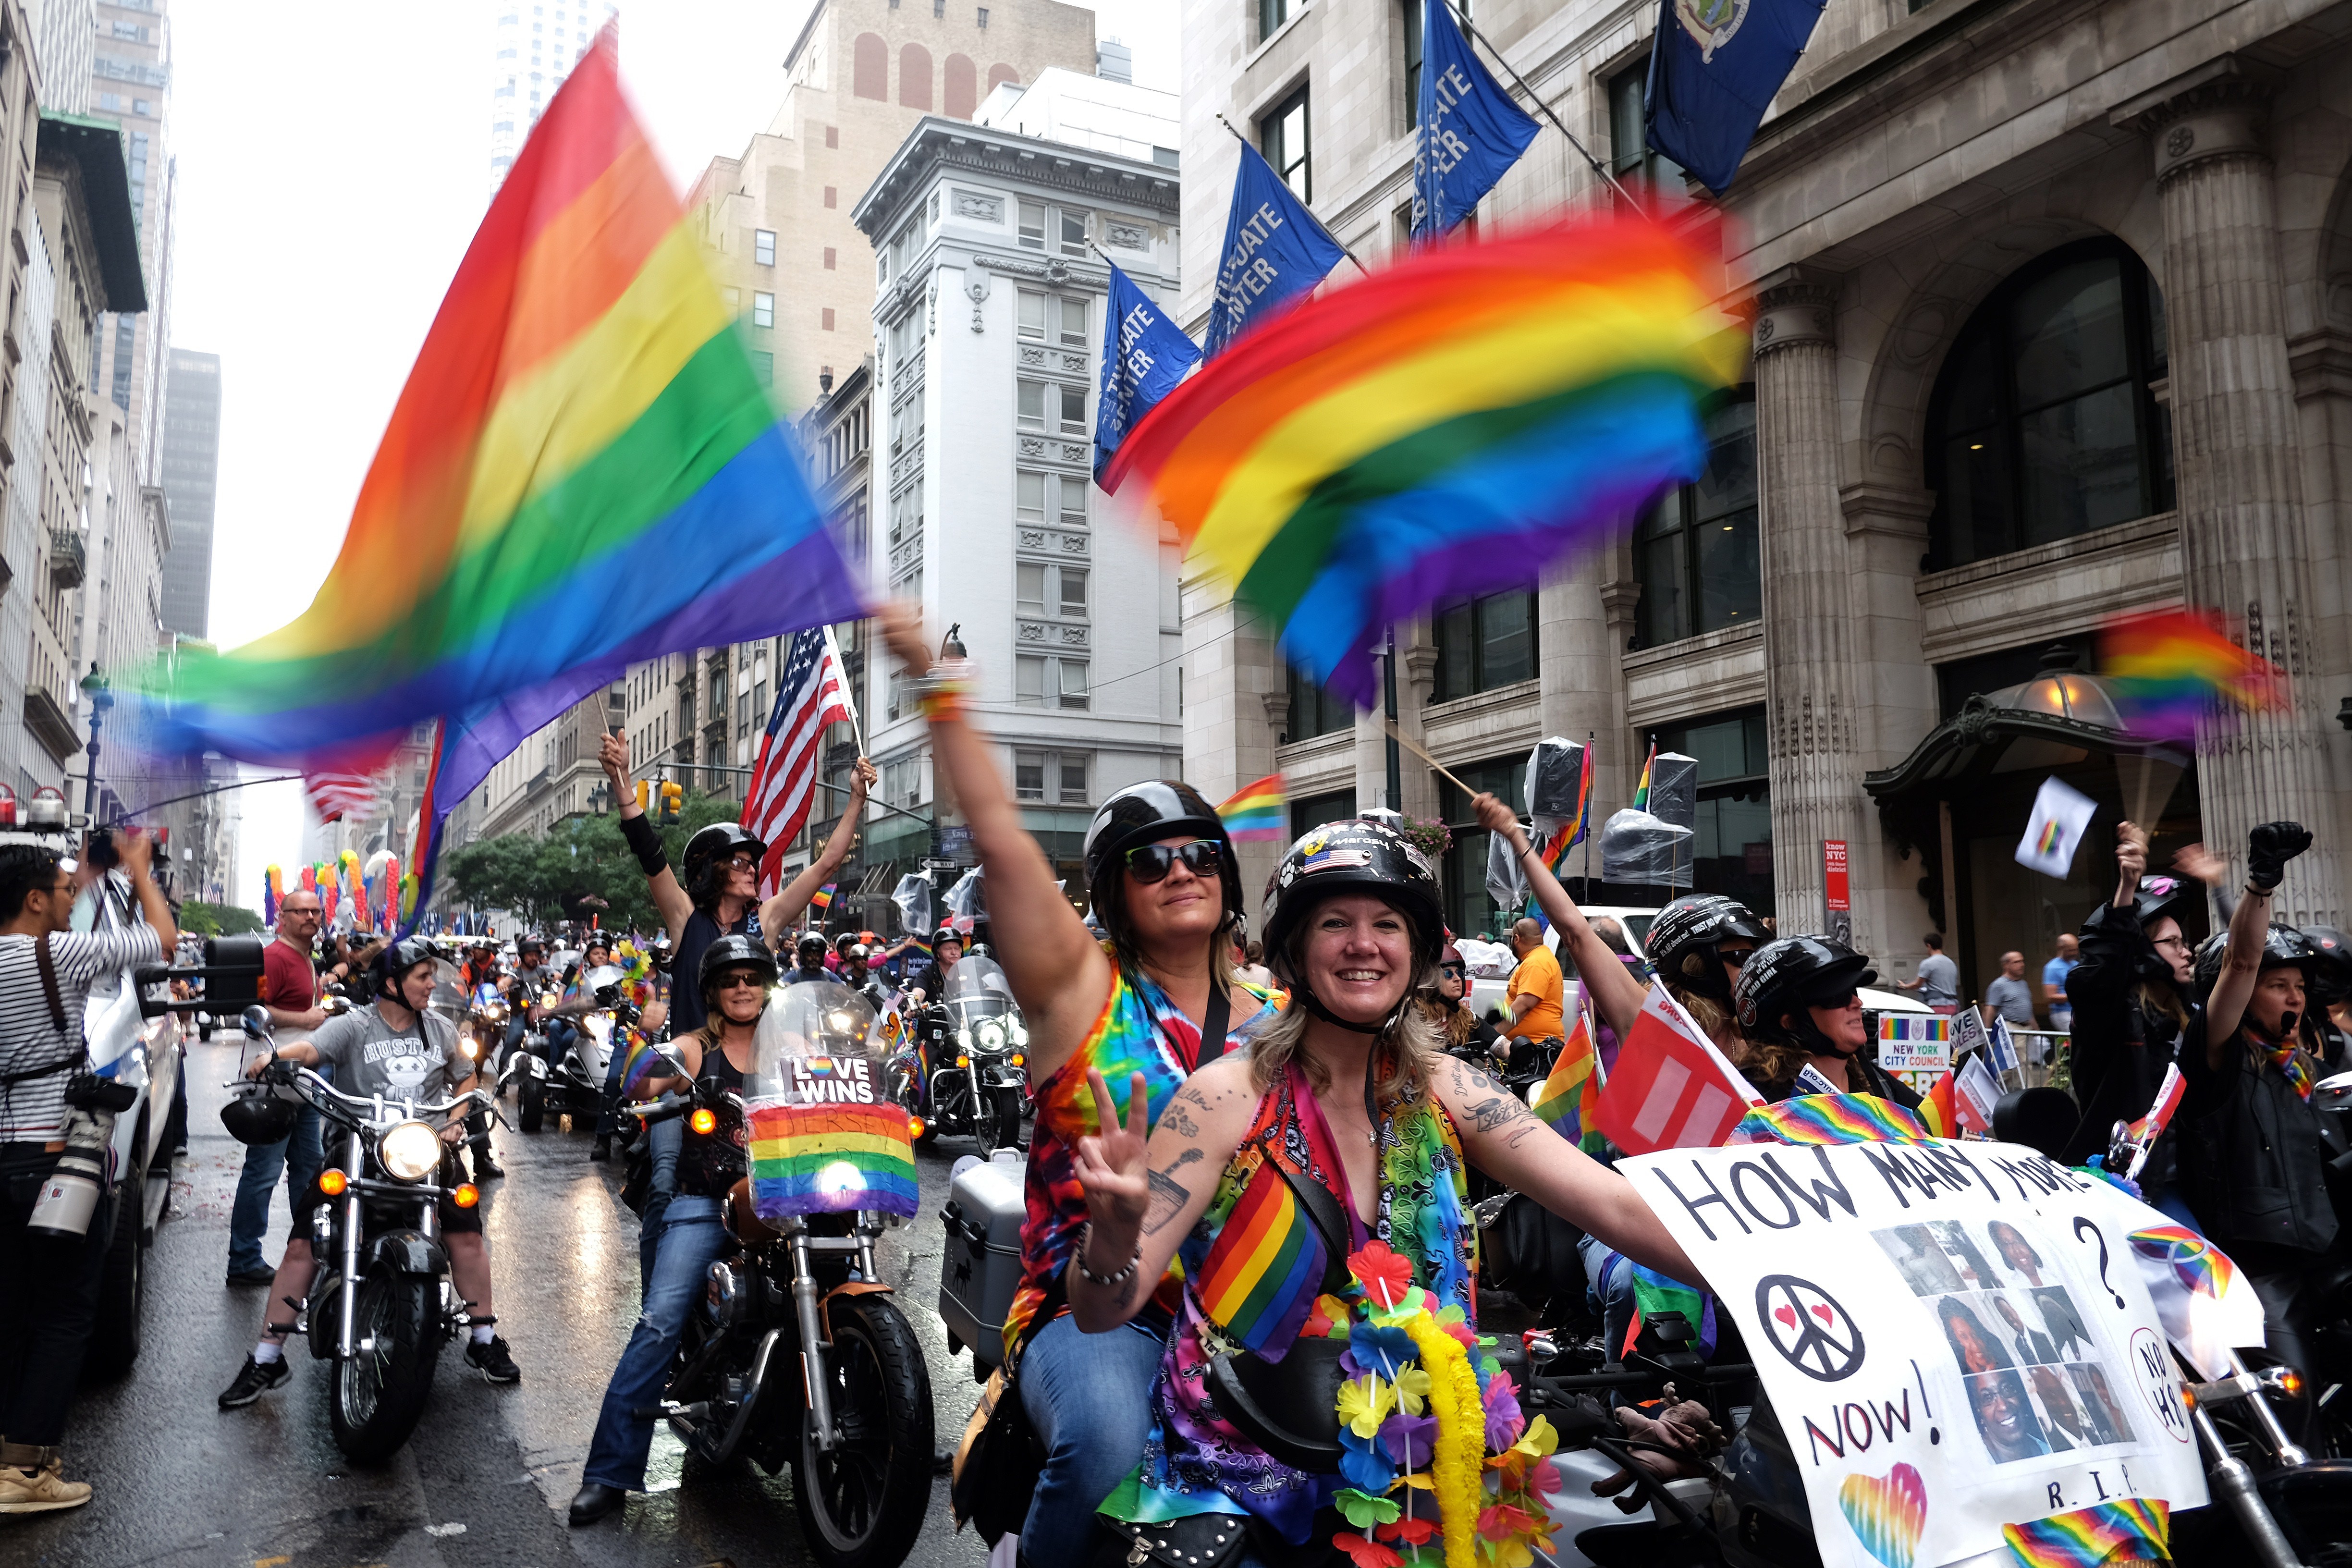 Bishop says pride month activities are harmful to kids, faces huge international backlash